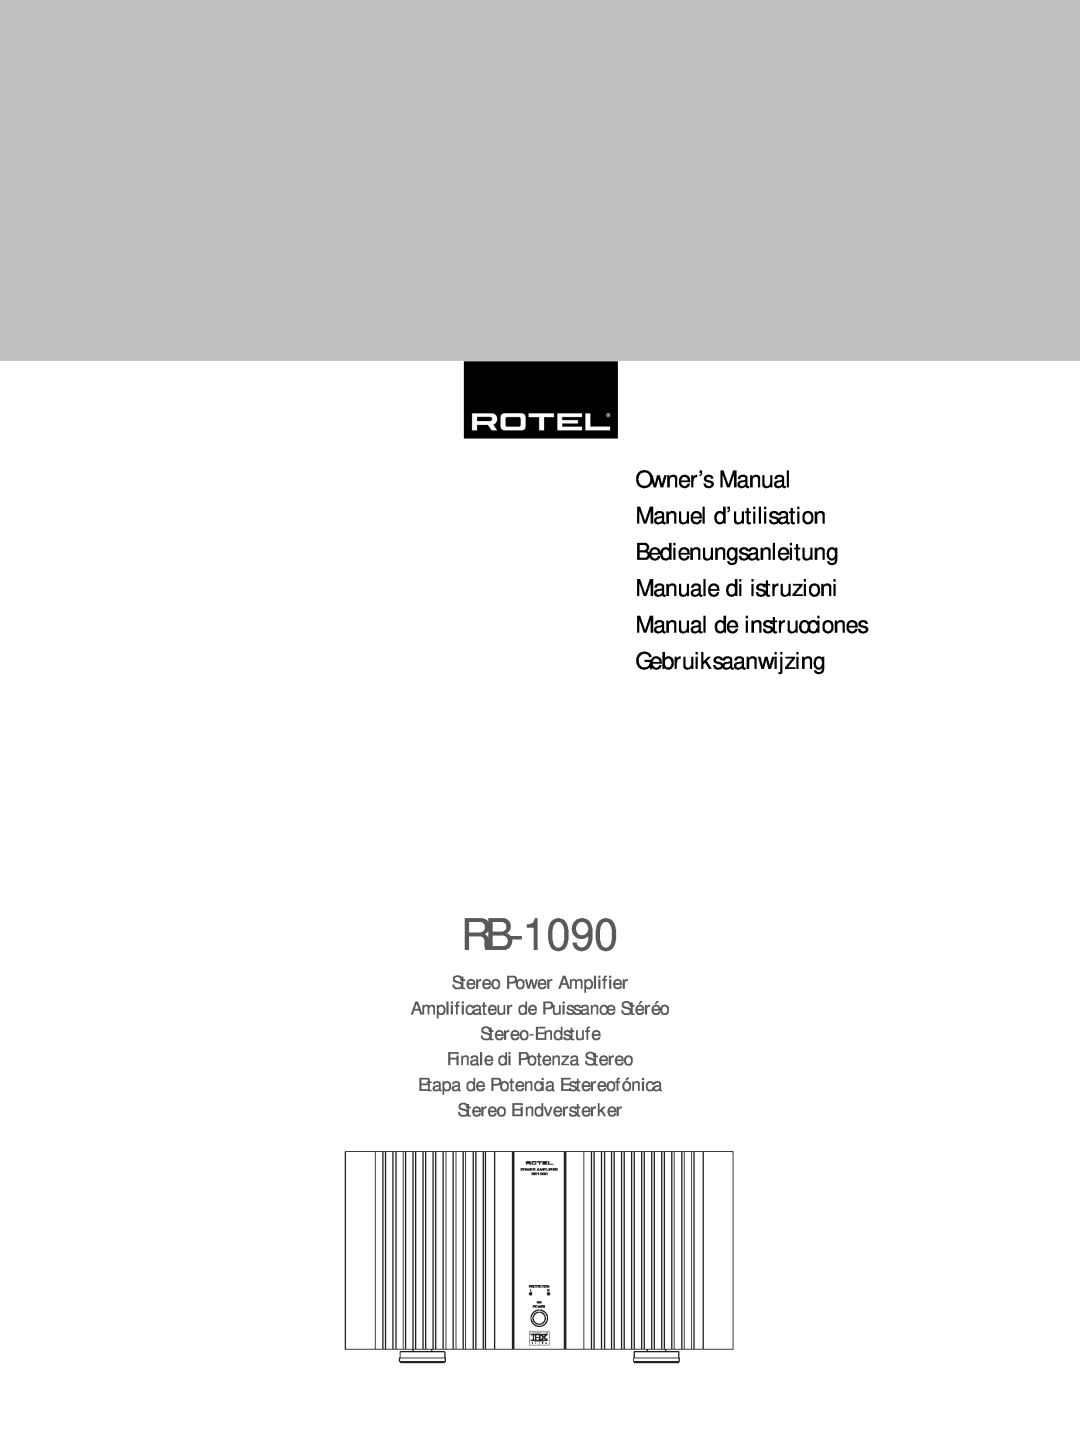 Rotel RB1090 owner manual Bedienungsanleitung Manuale di istruzioni, Manual de instrucciones Gebruiksaanwijzing, RB-1090 